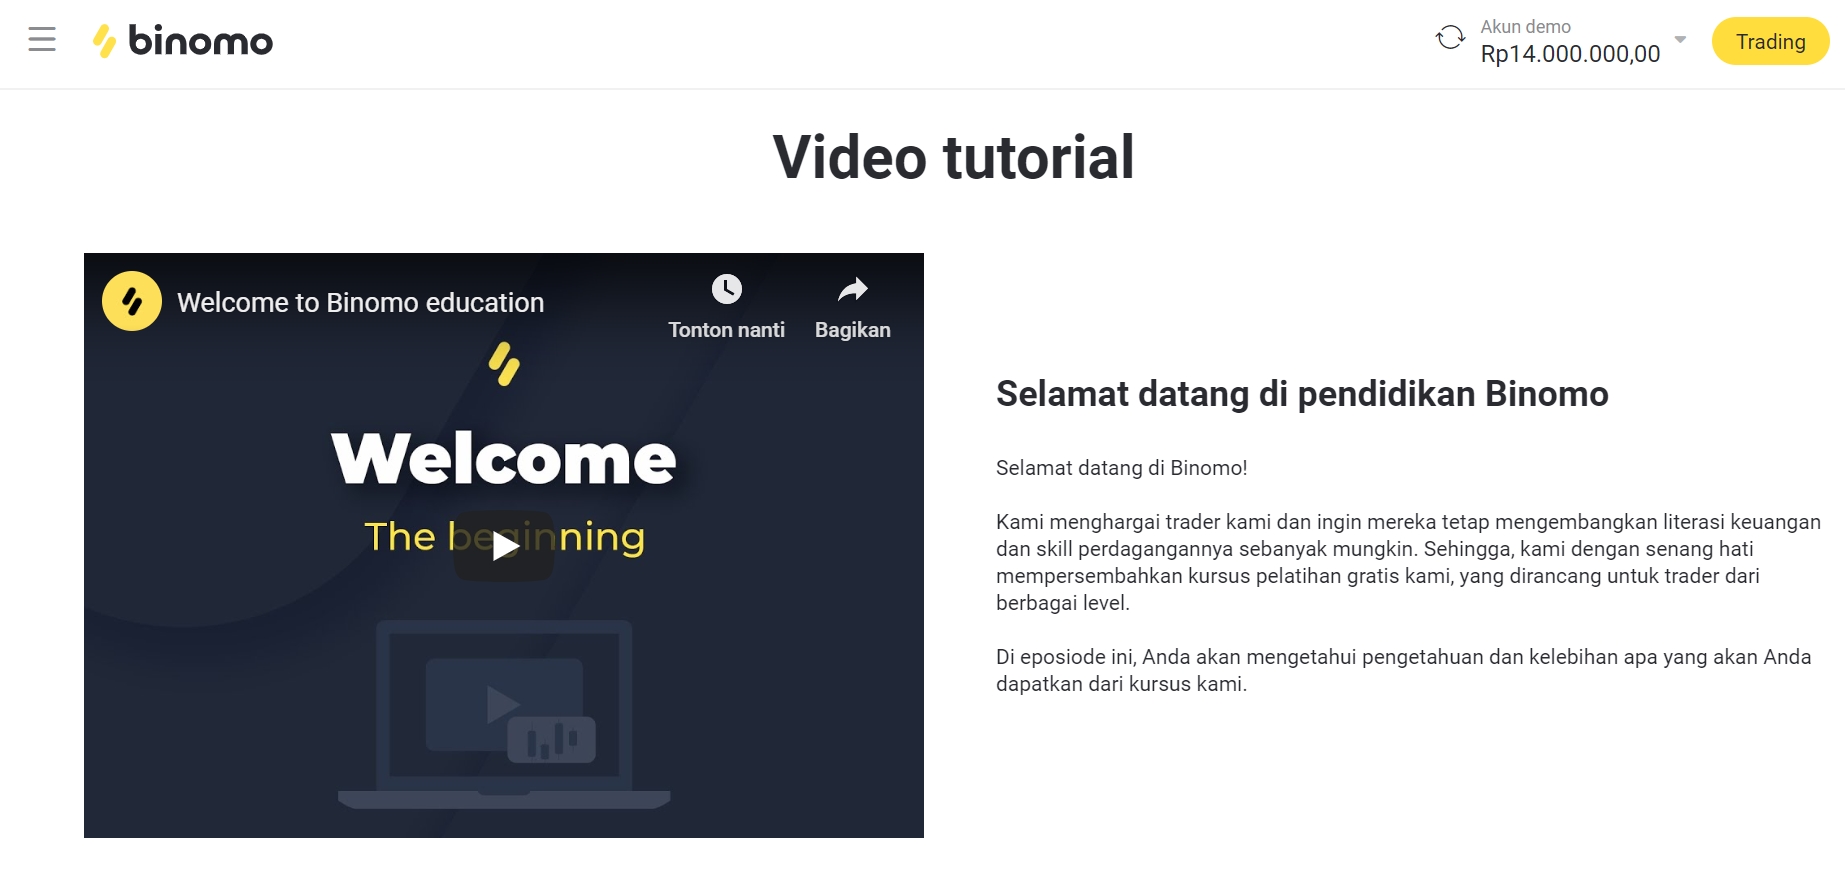 Gambar video tutorial Binomo